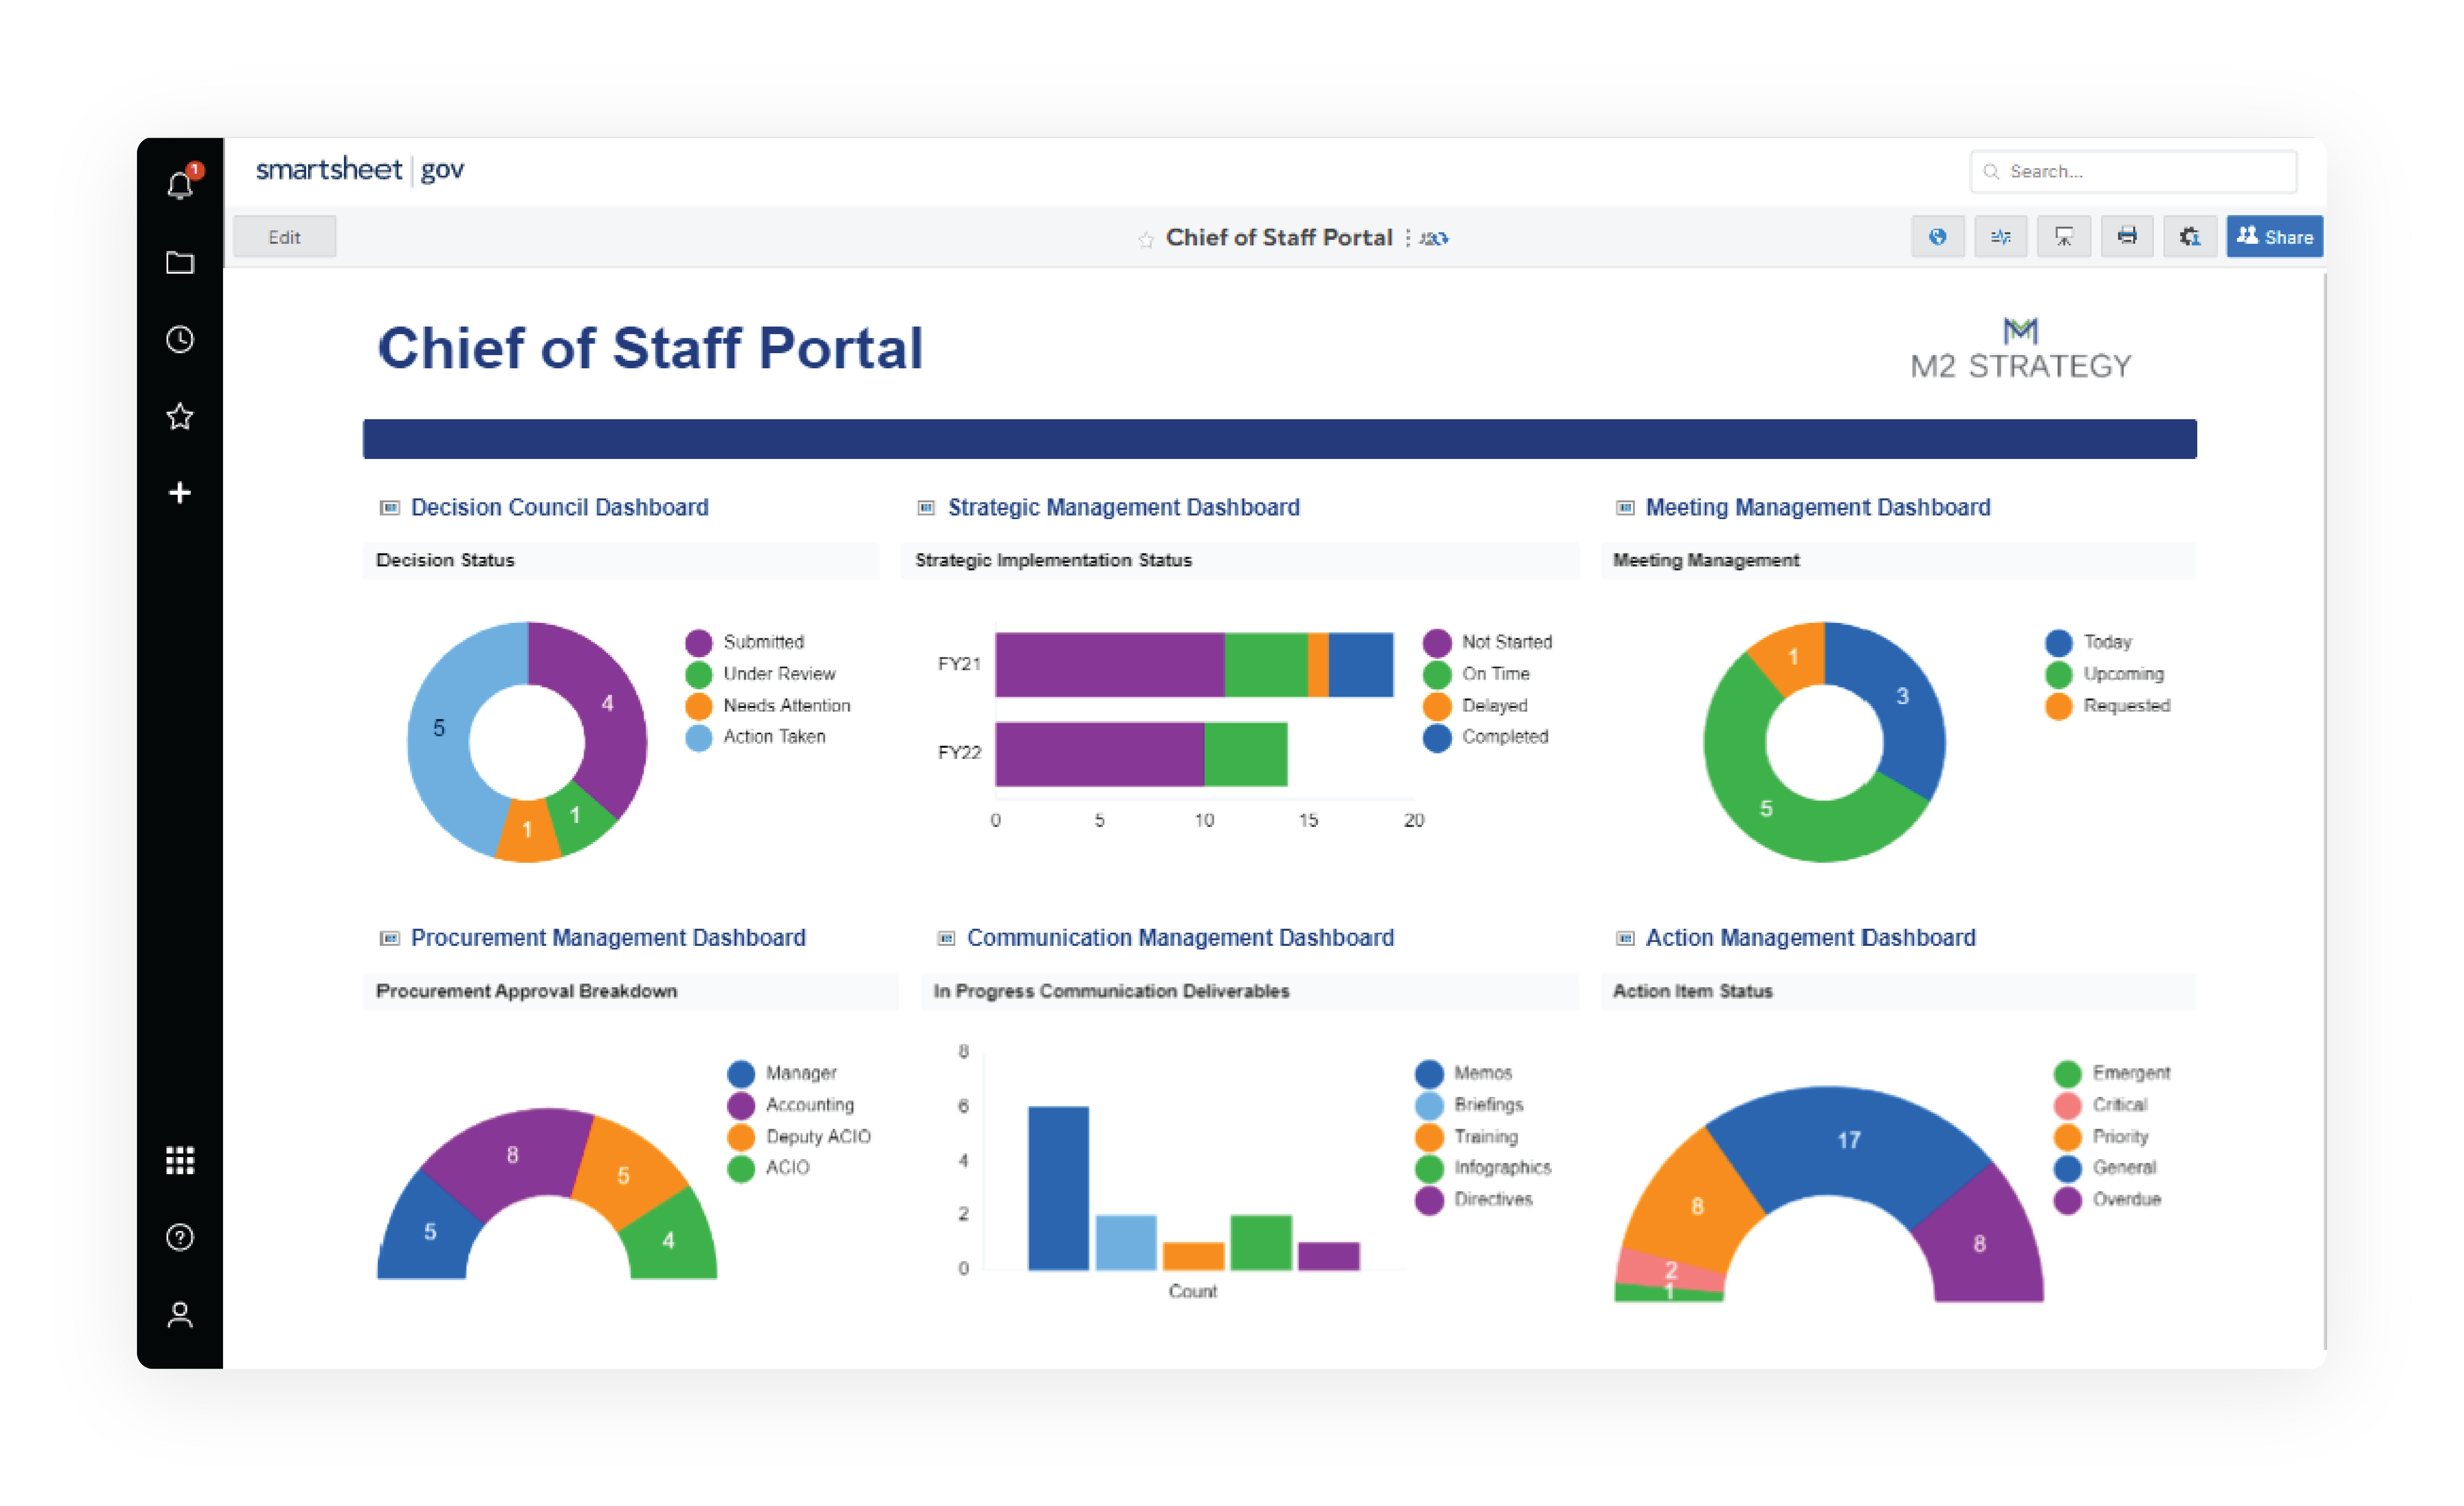 Chief of Staff Portal